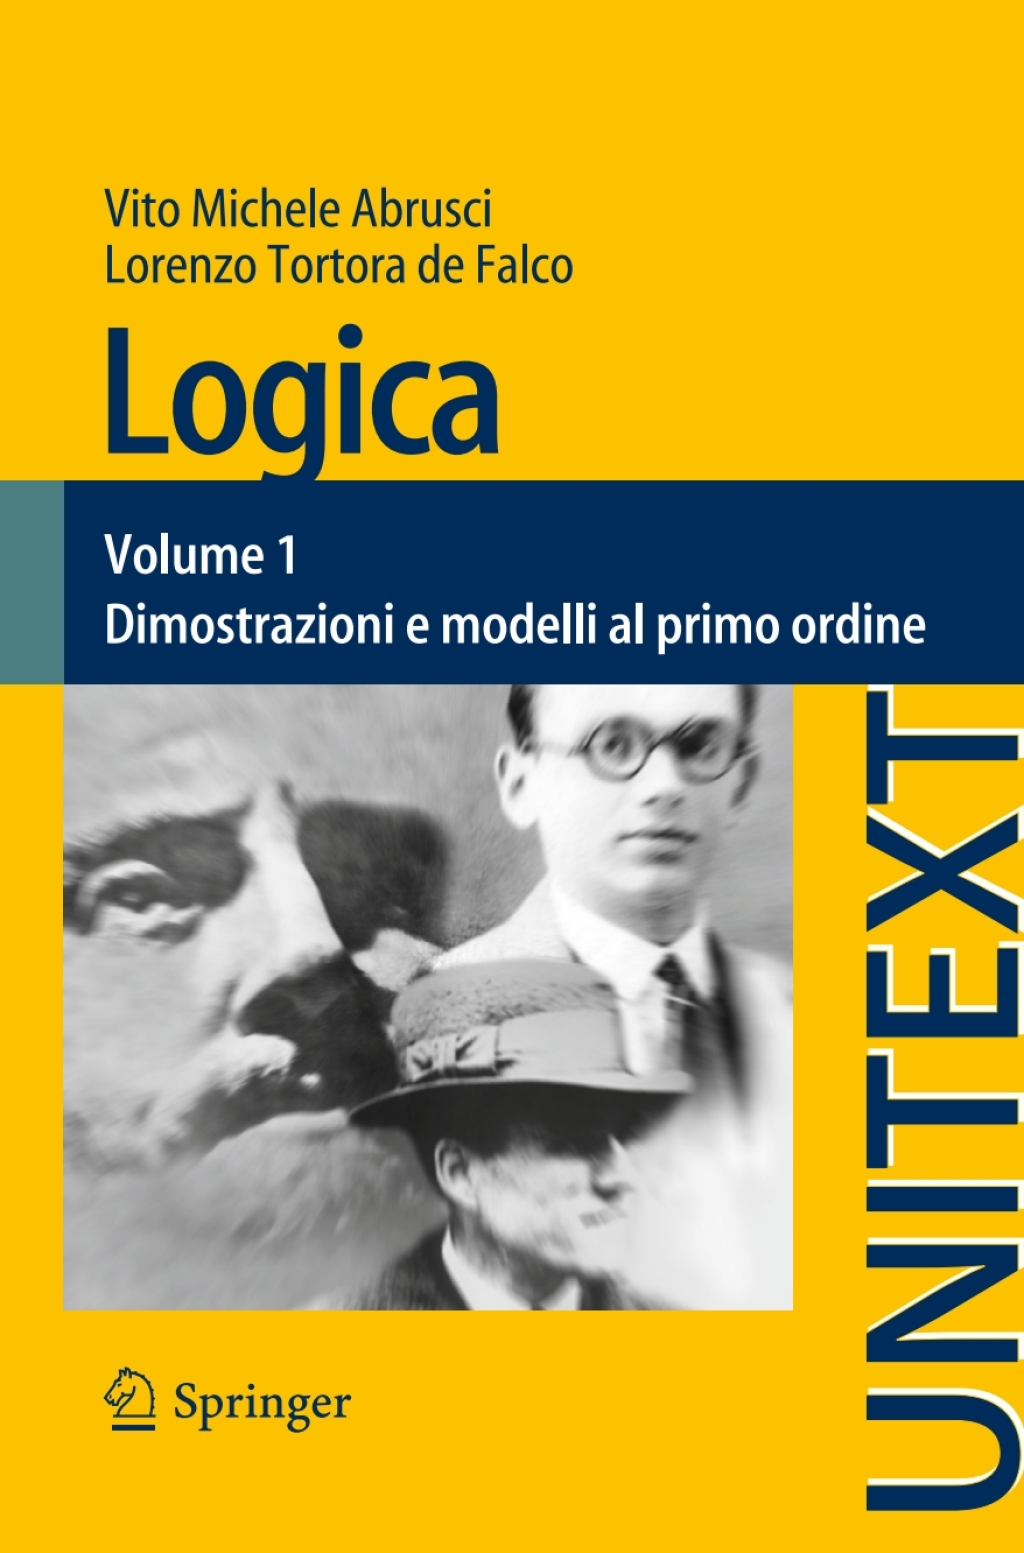 Logica (eBook) - Vito Michele Abrusci; Lorenzo Tortora de Falco,